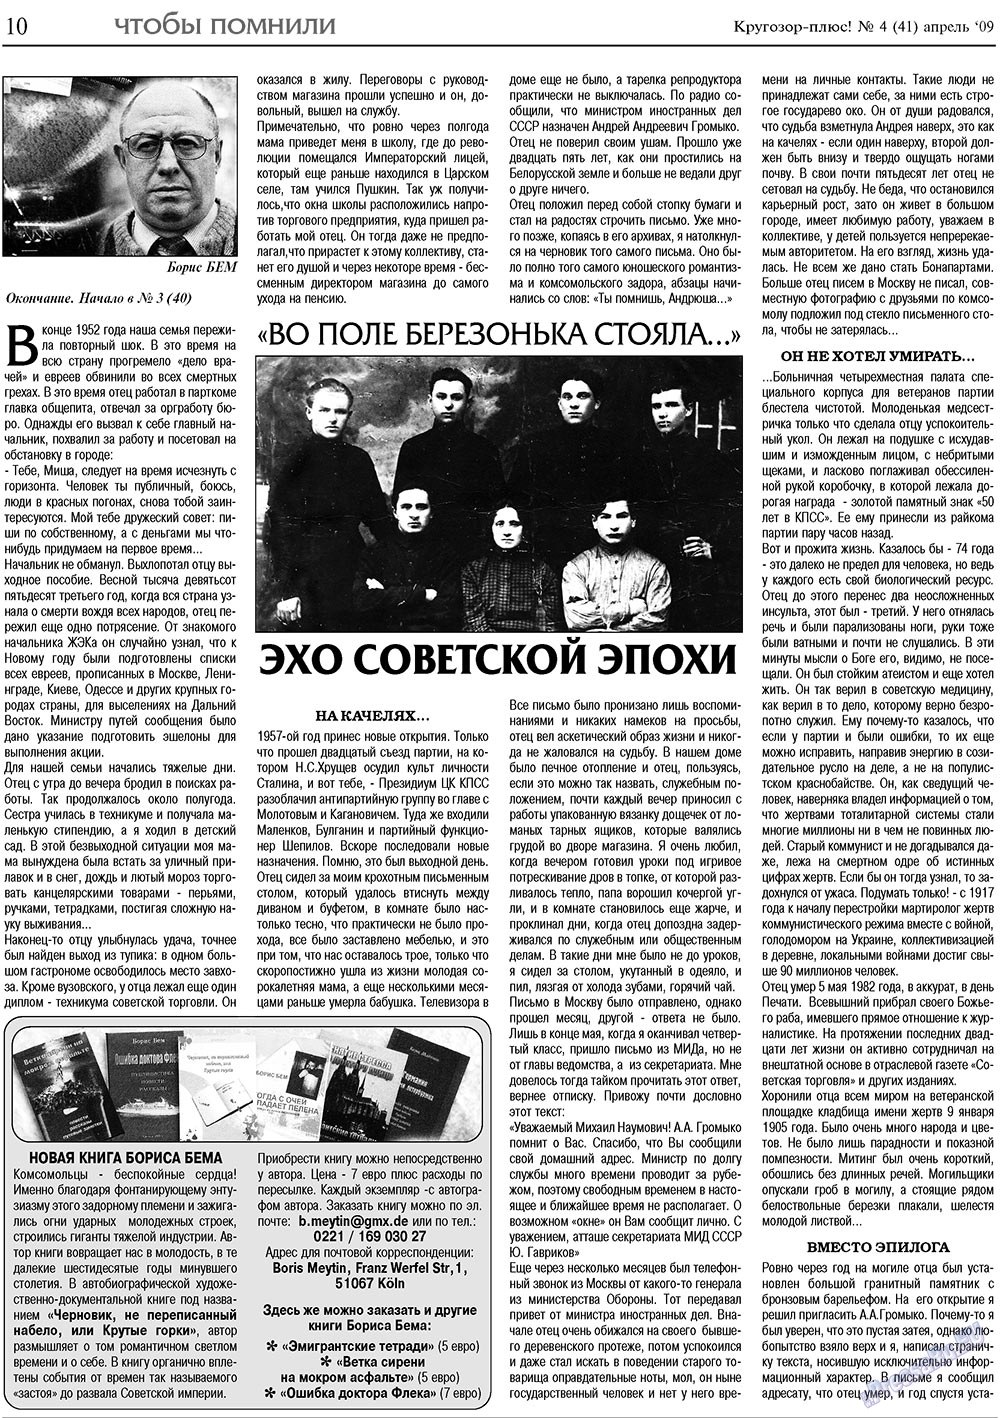 Кругозор плюс! (газета). 2009 год, номер 4, стр. 10